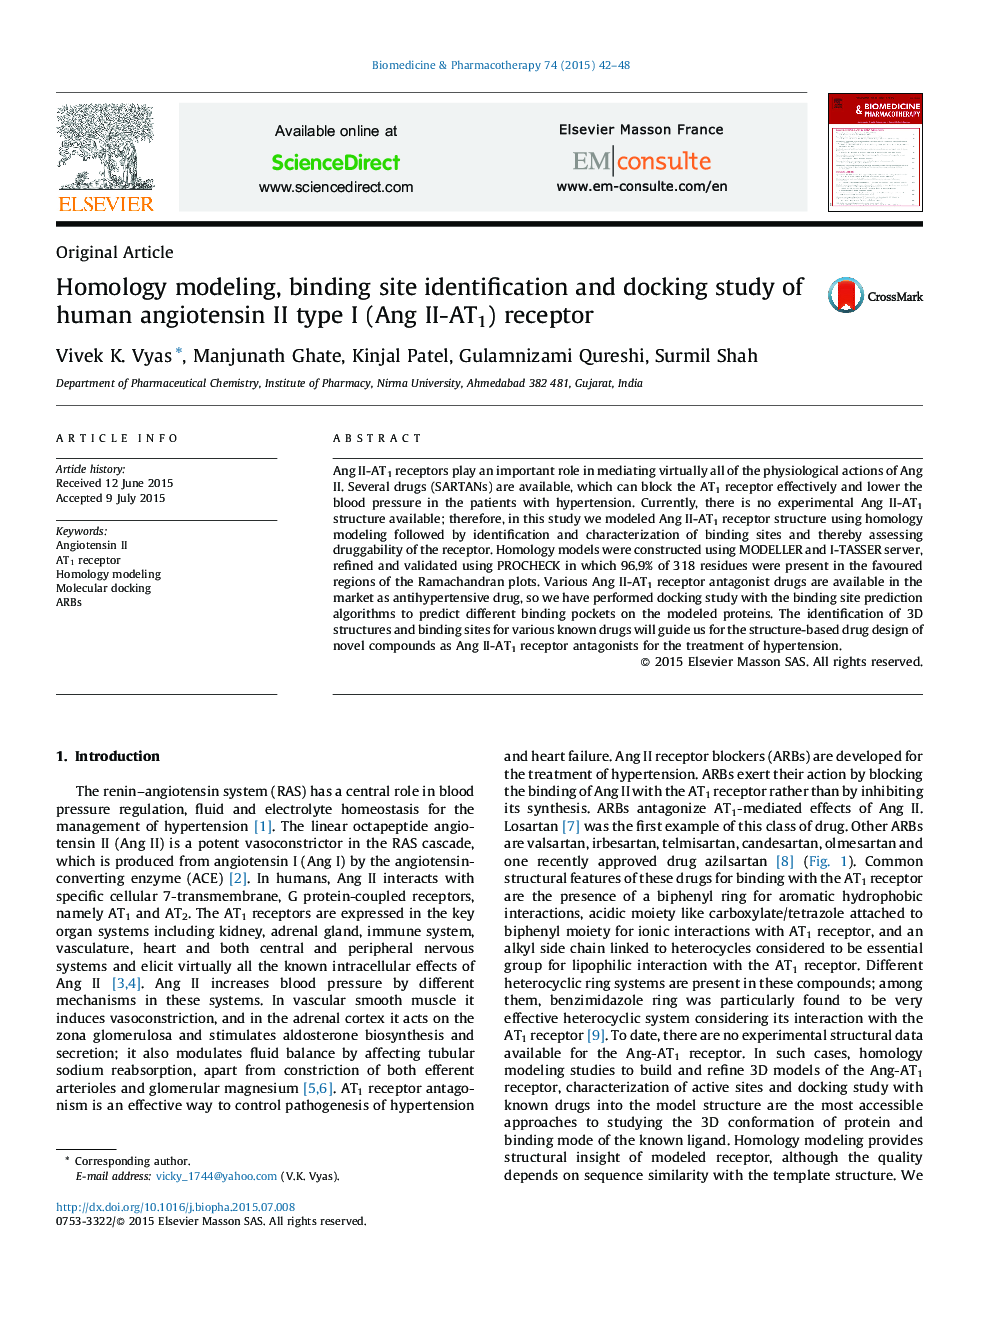 Homology modeling, binding site identification and docking study of human angiotensin II type I (Ang II-AT1) receptor